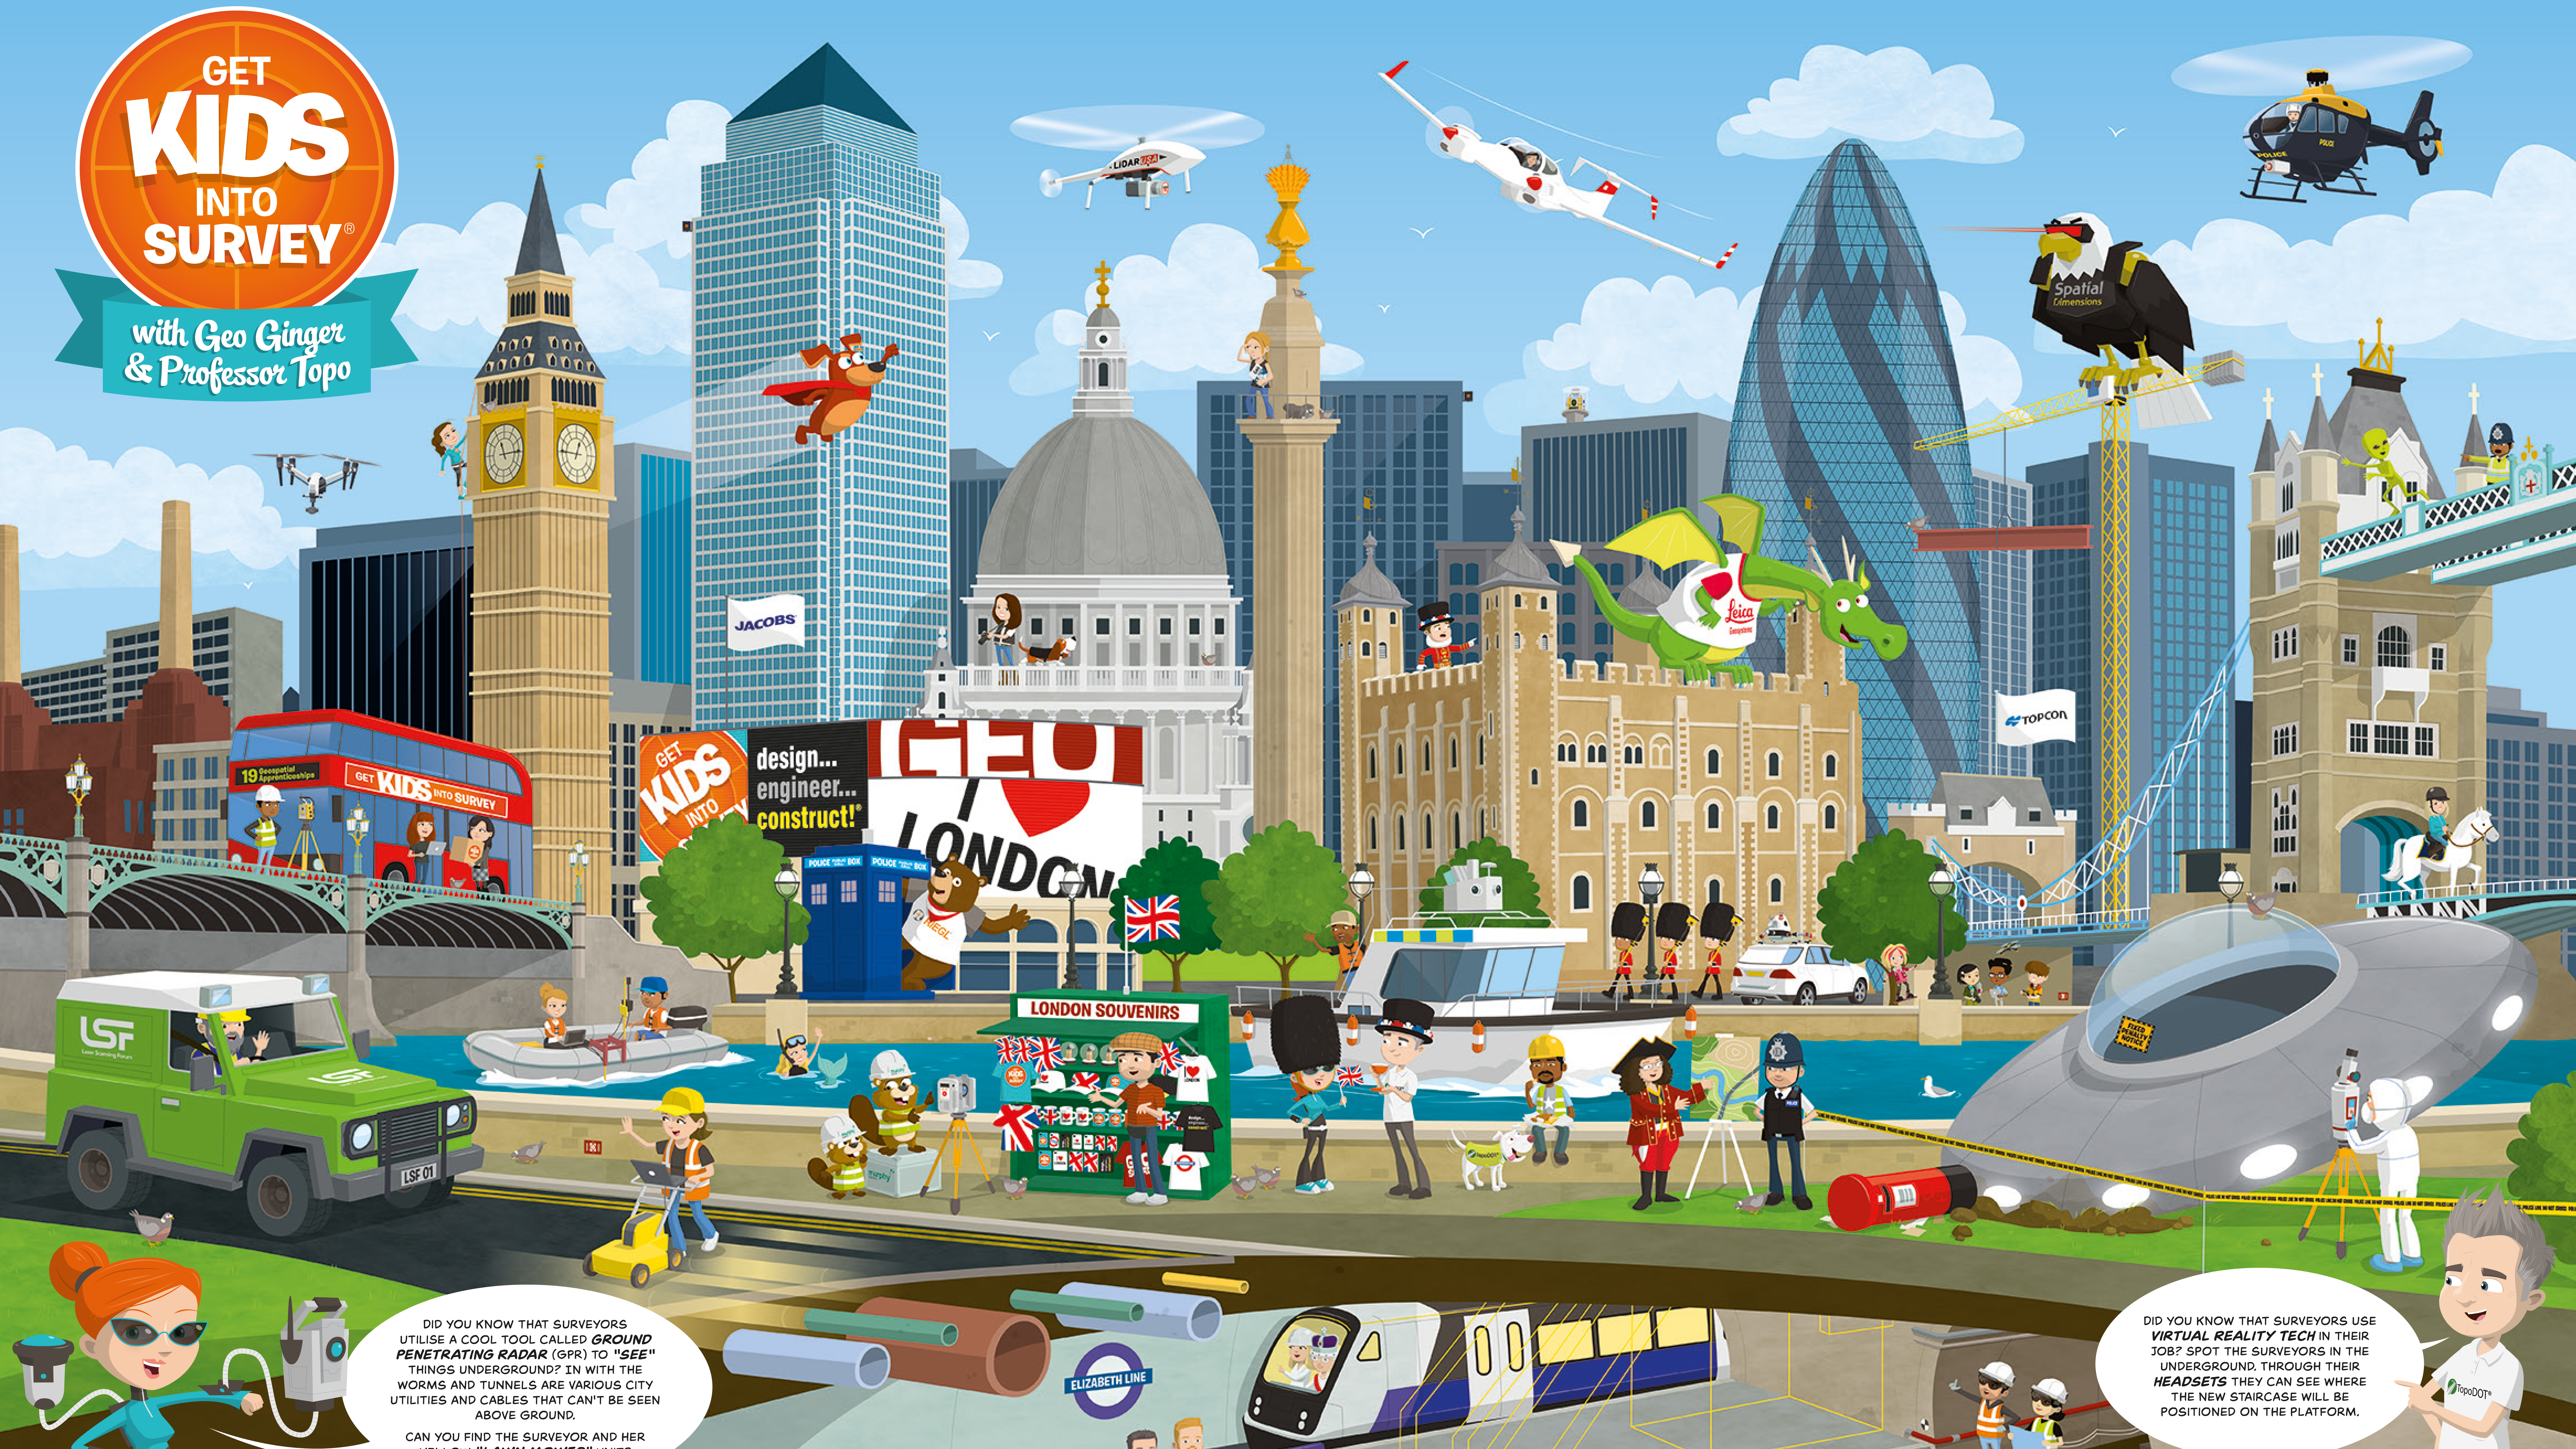 Get kids into survey London poster